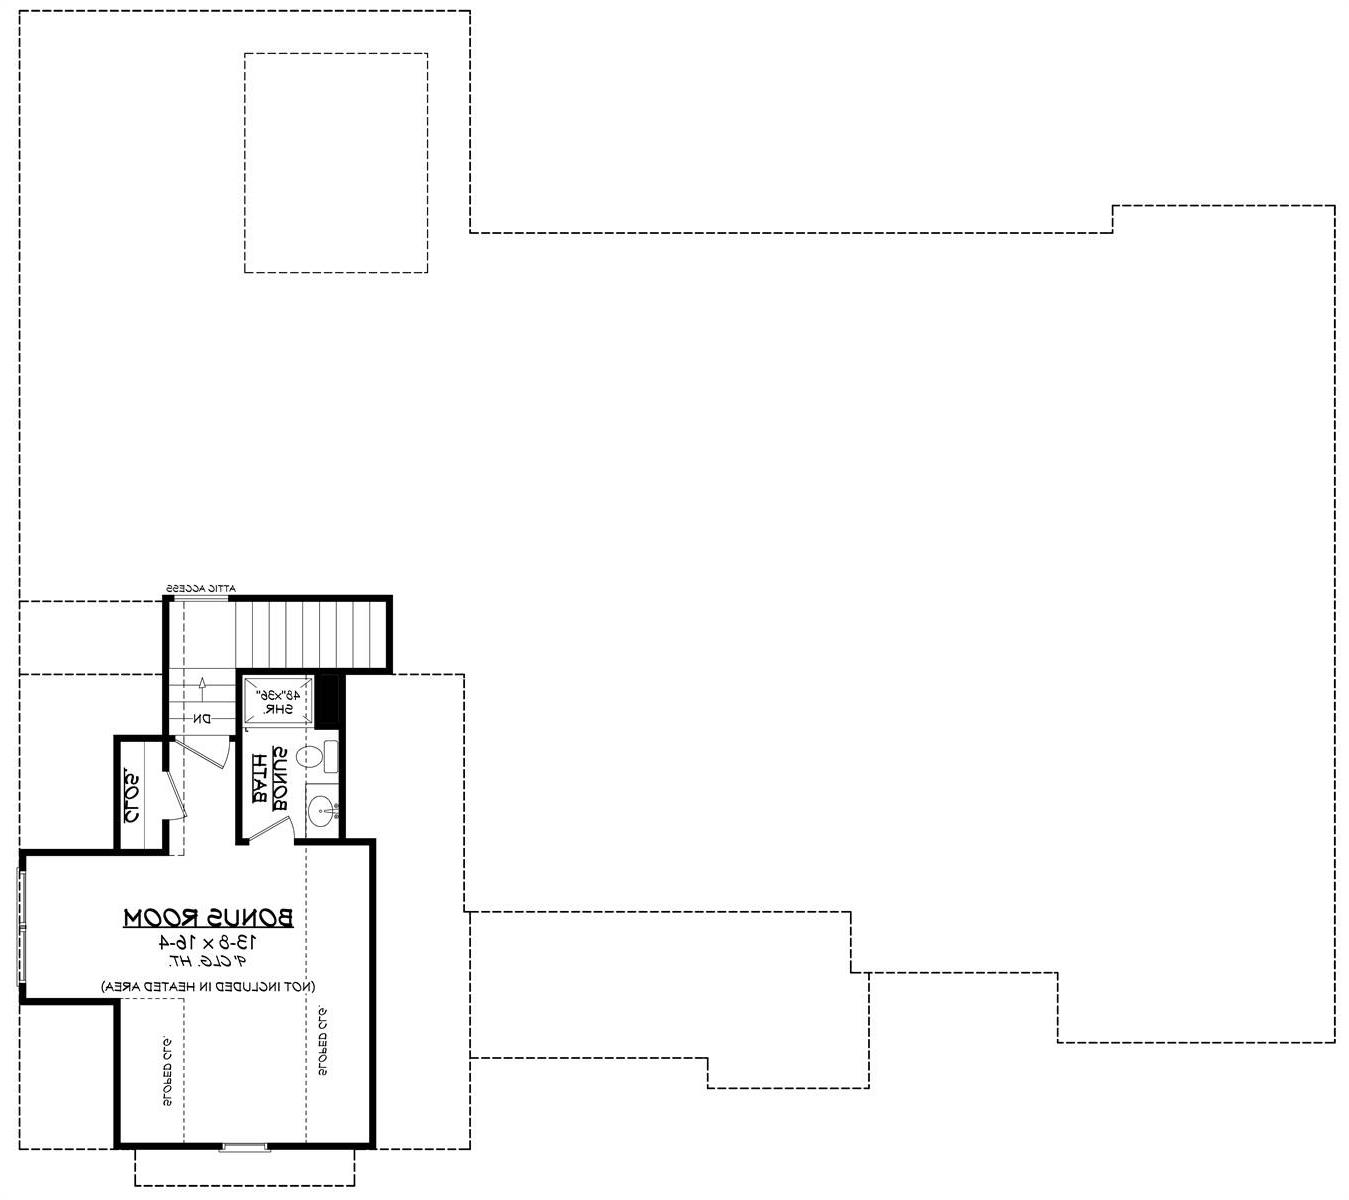 Optional Bonus Room Floor Plan image of Morning Trace House Plan